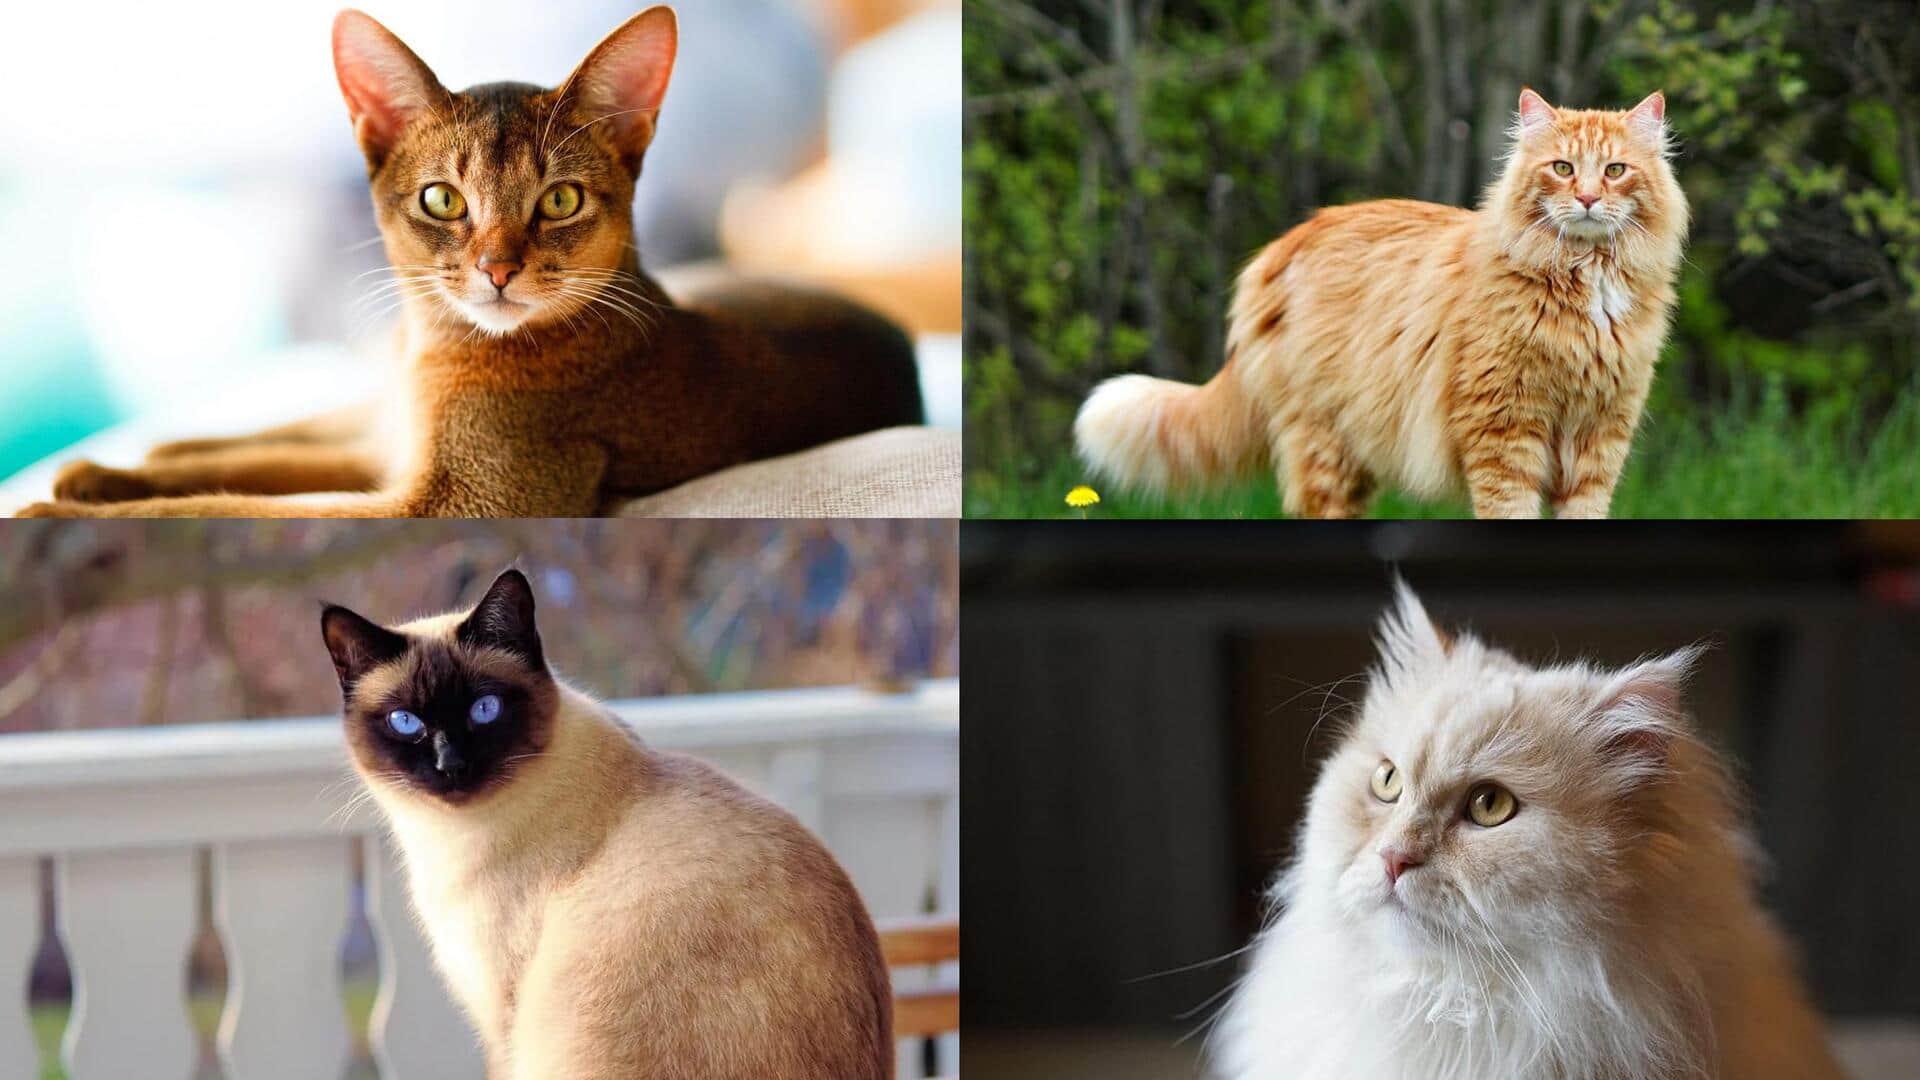 Purr-fect companions: Top cat breeds for children